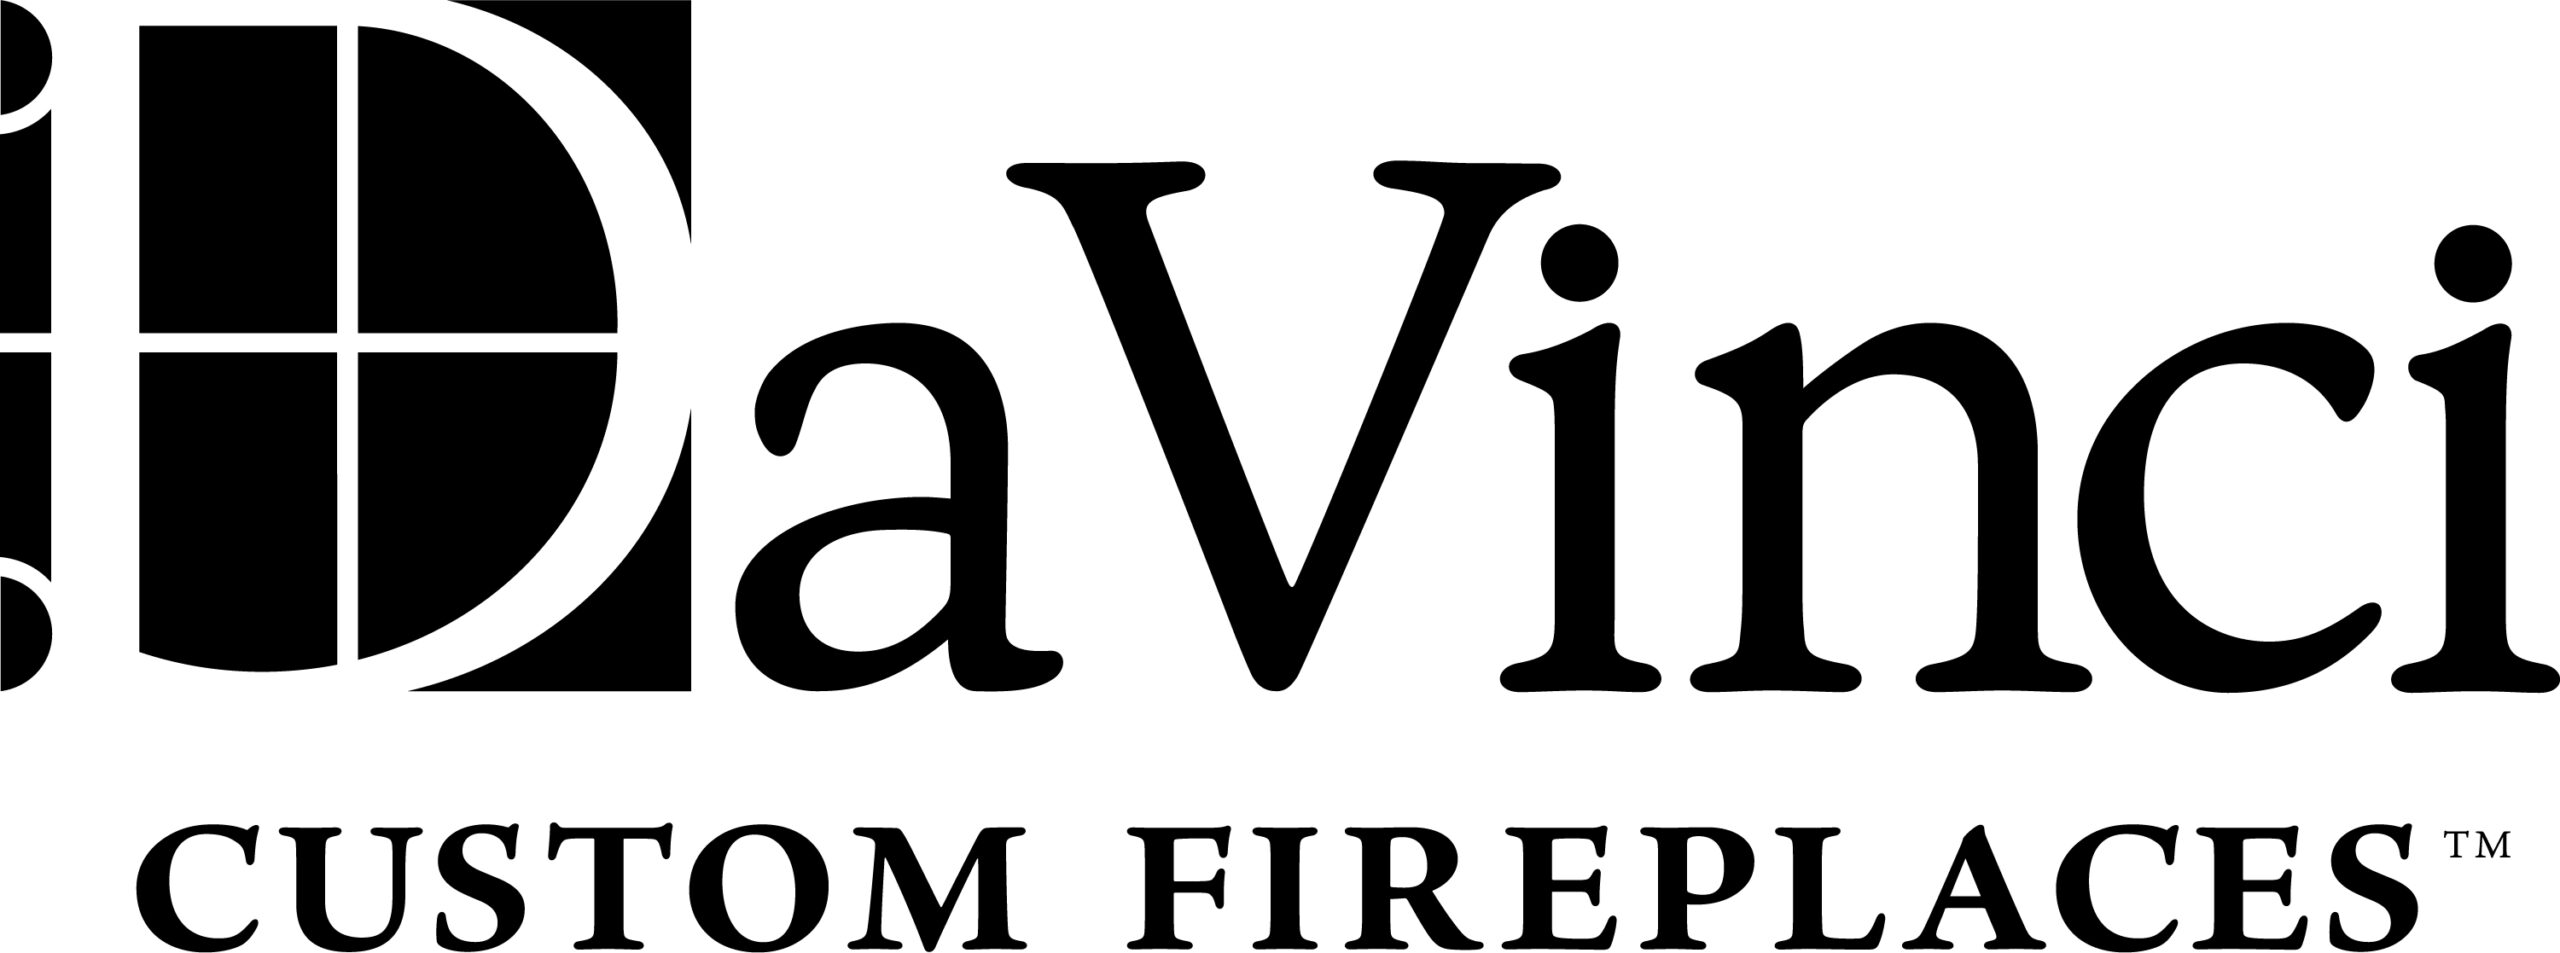 Link to DaVinci Firenze Collection website via DaVinci custom Fireplace Logo